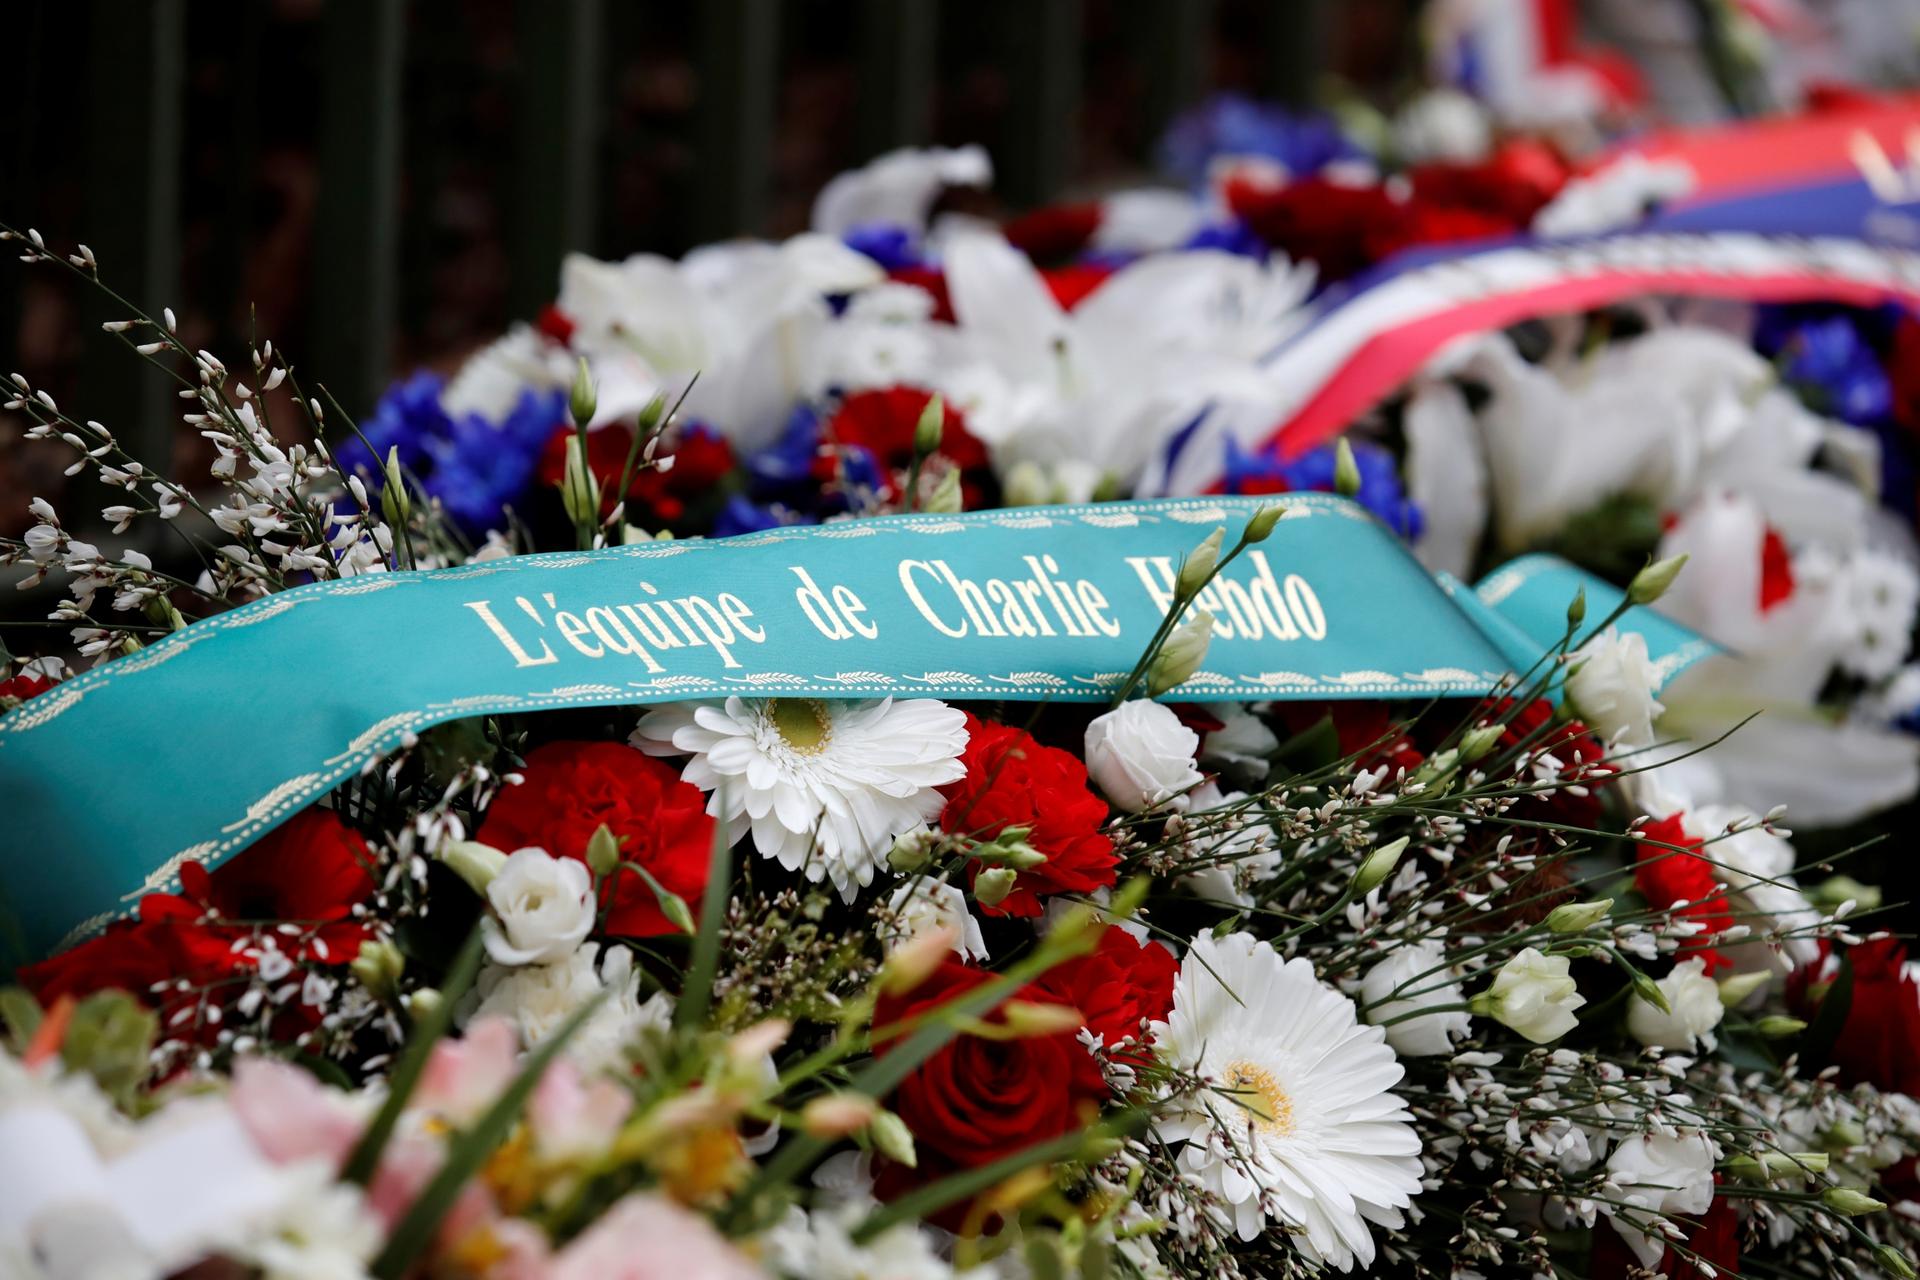 Bouquet of flowers memorializing Charlie Hebdo